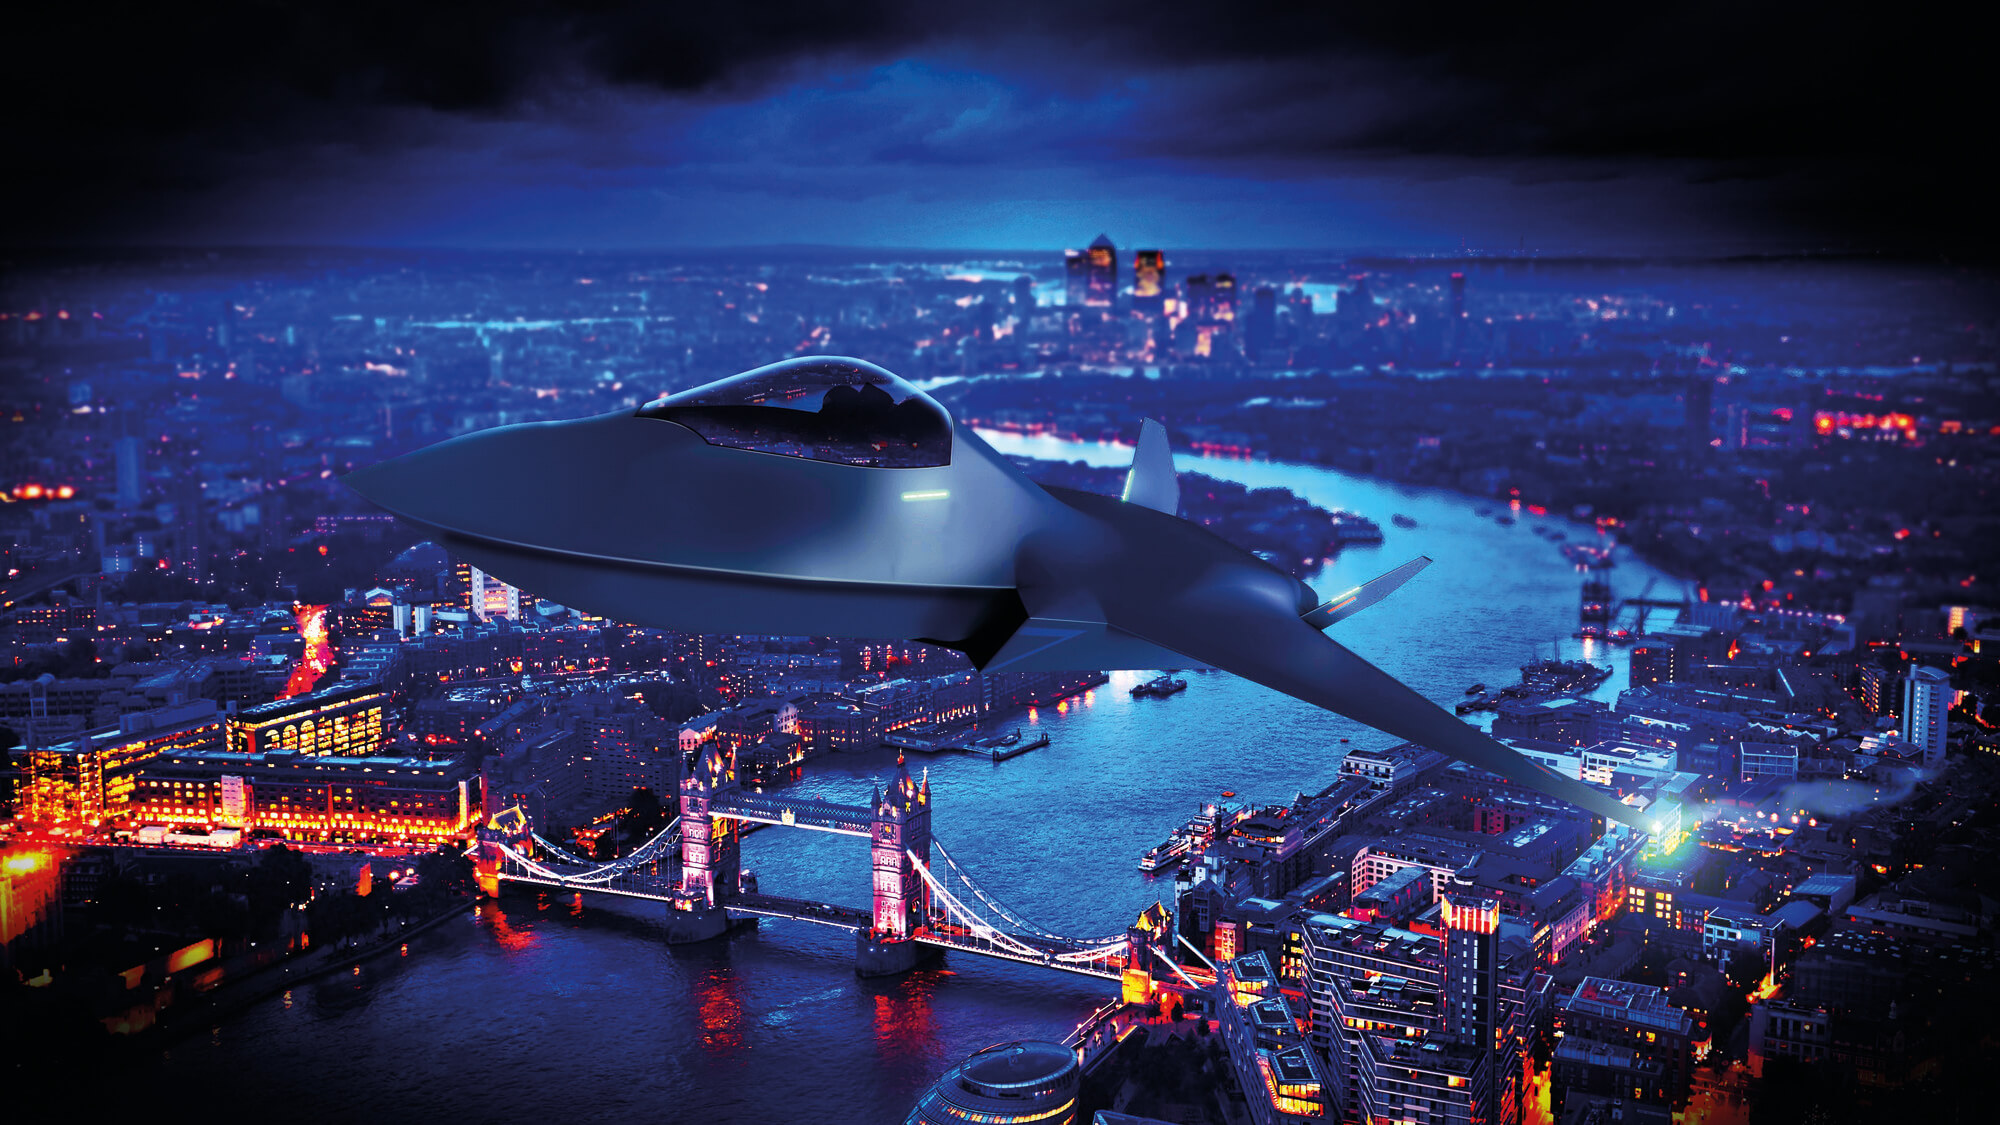 Tempest jet concept for Future Combat Air System (FCAS) program.